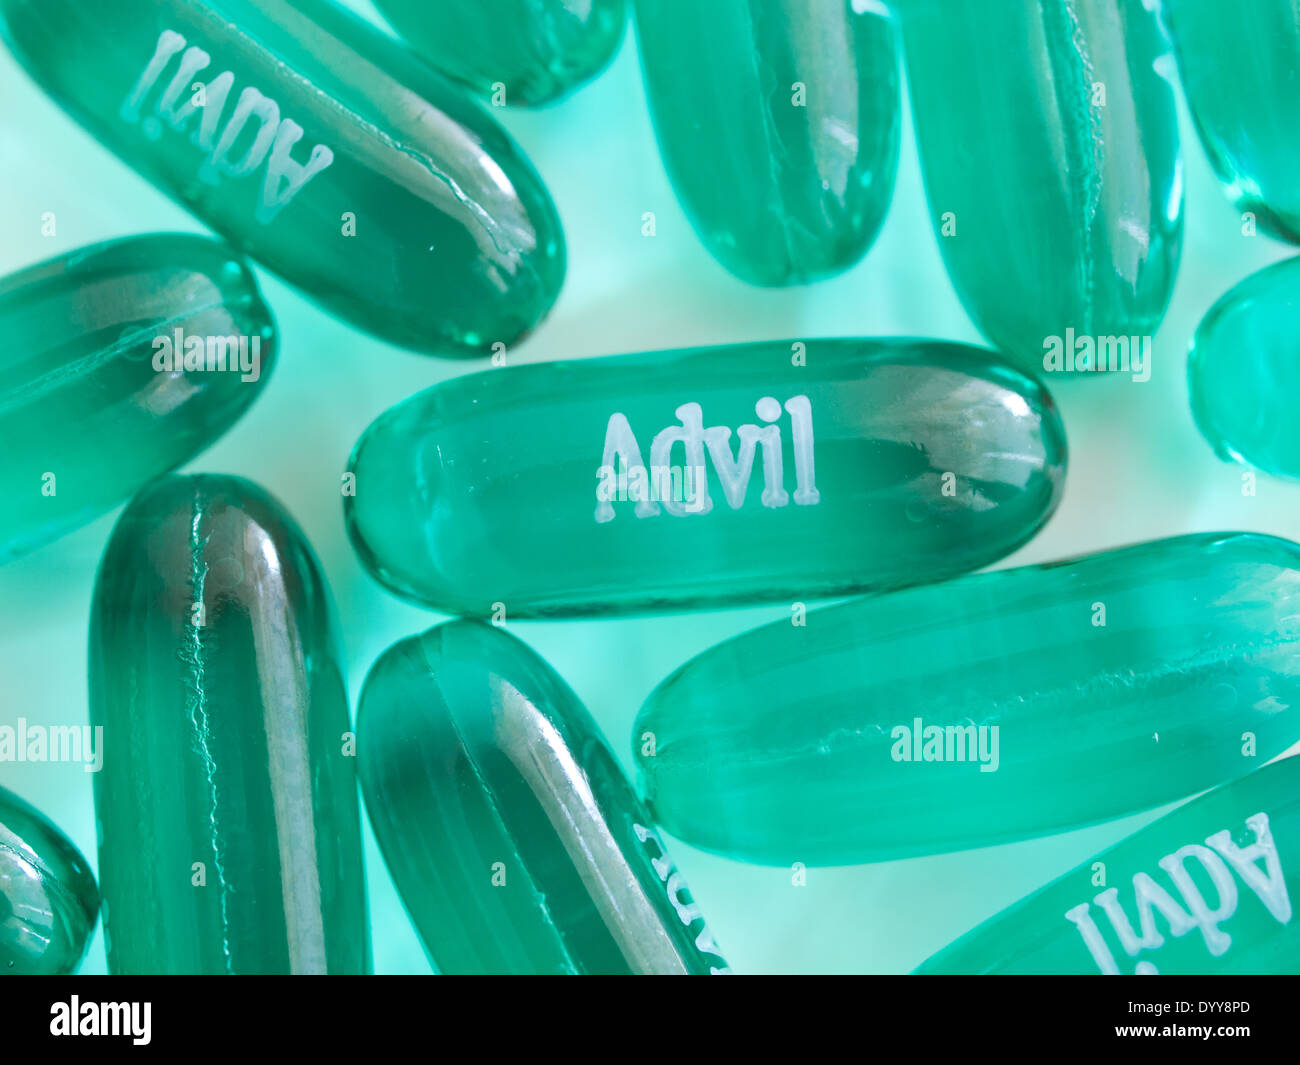 Advil liqui gel -Fotos und -Bildmaterial in hoher Auflösung – Alamy